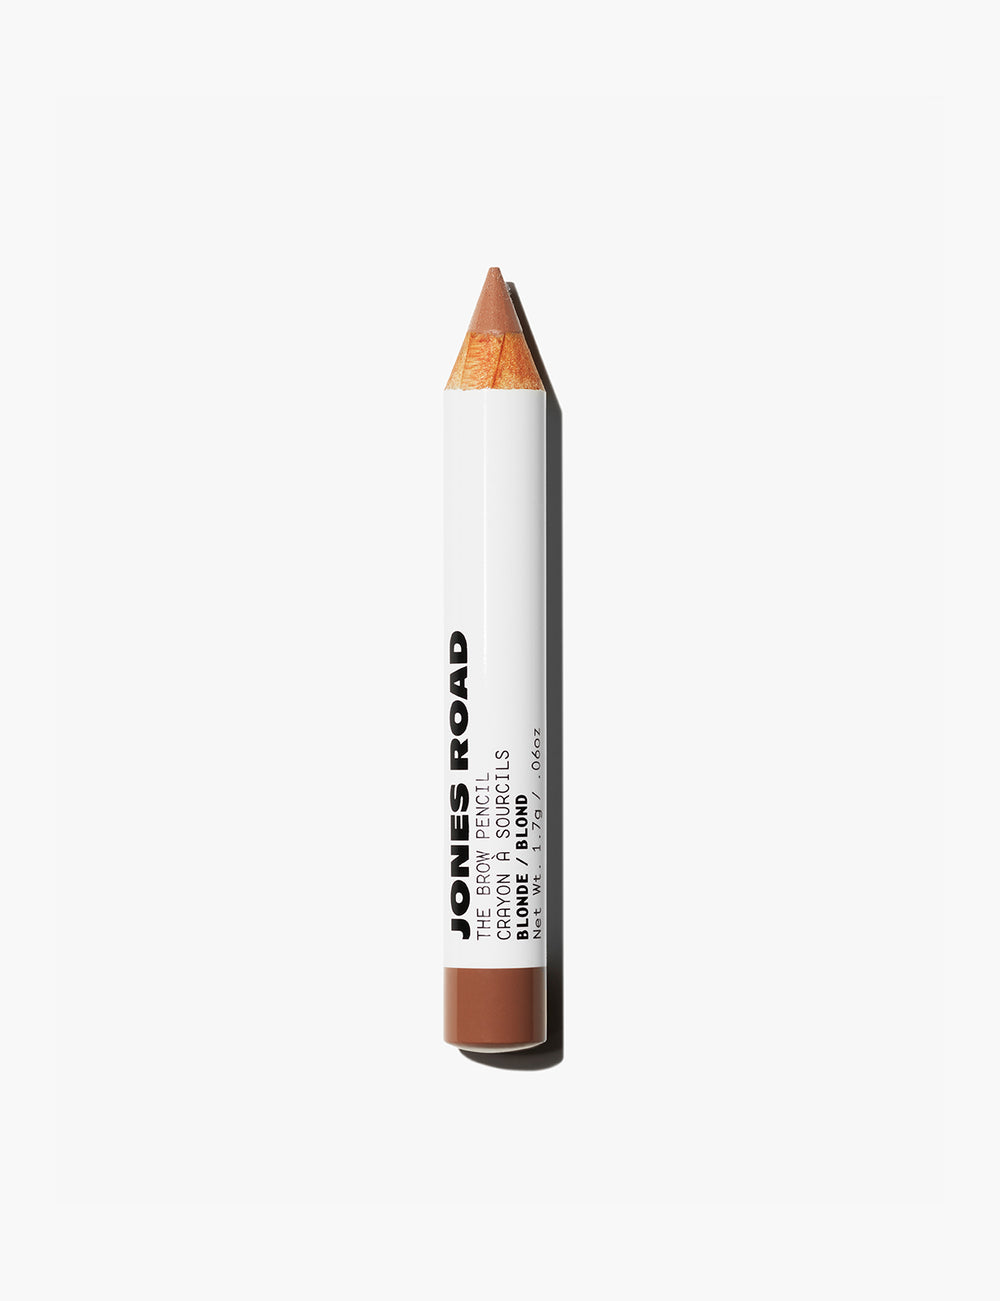 Jones Road clean eyebrow pencil in blonde